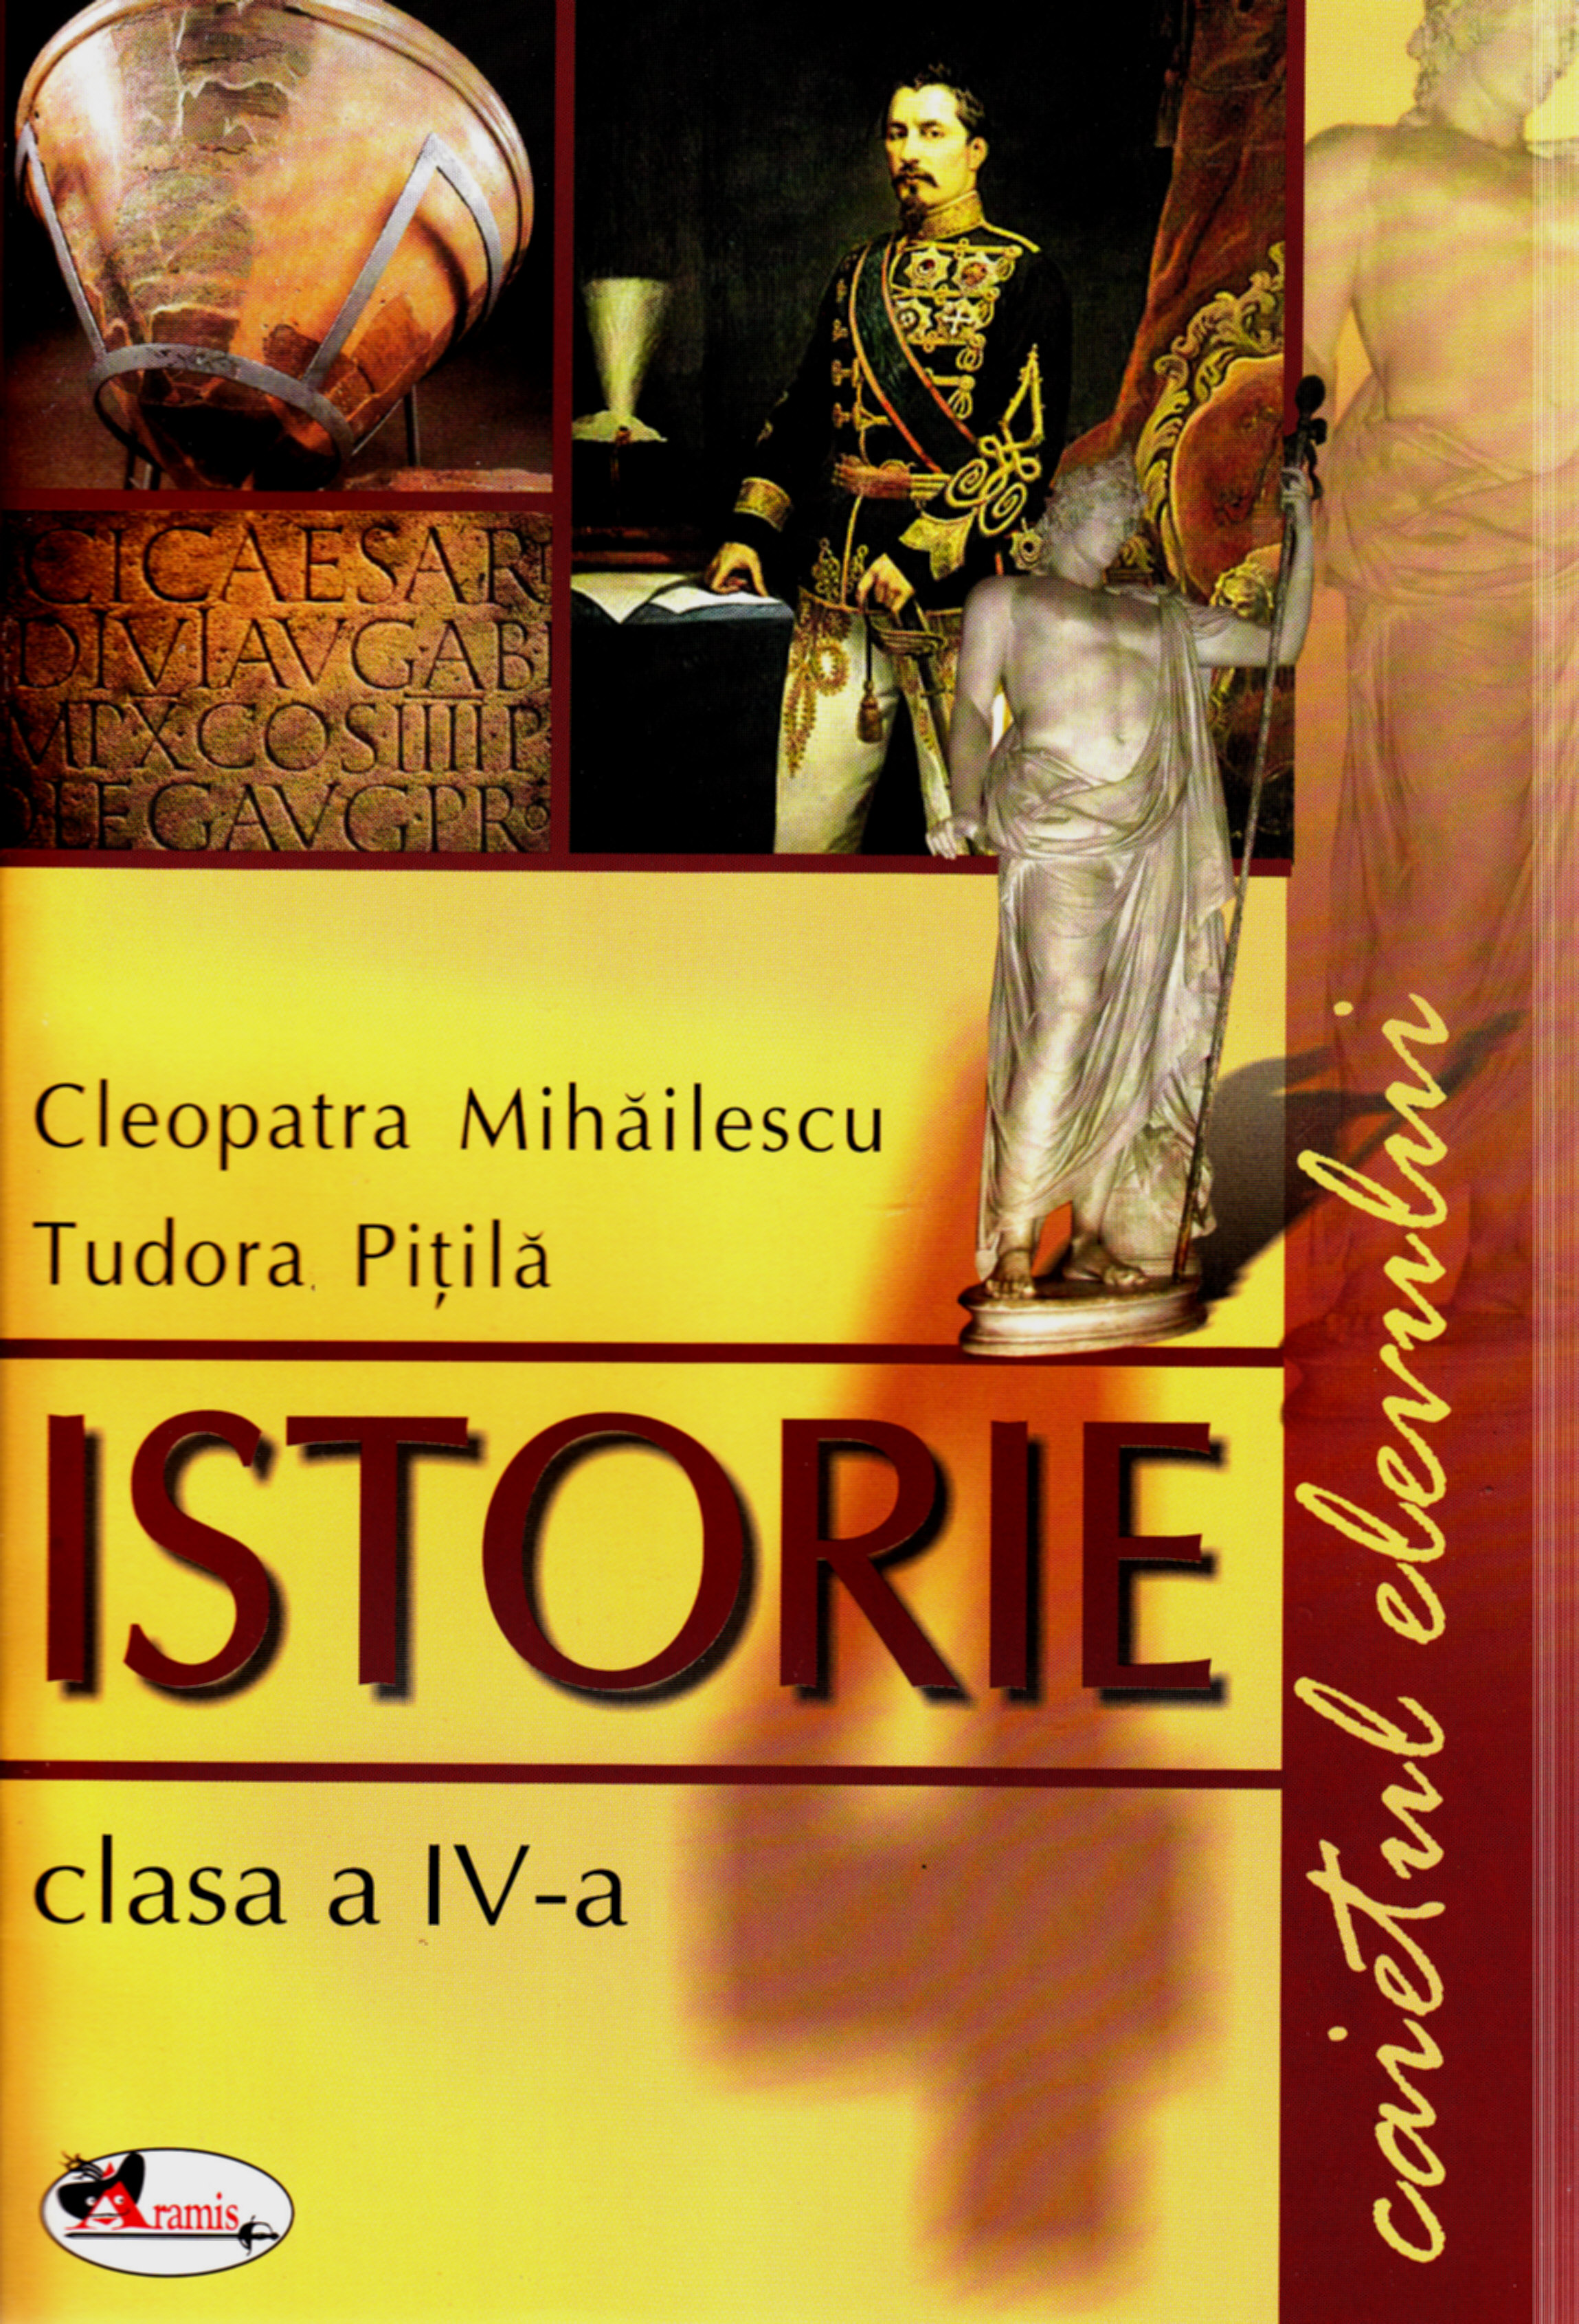 Manual istorie Clasa 4 Caiet - Cleopatra Mihailescu, Tudora Pitila